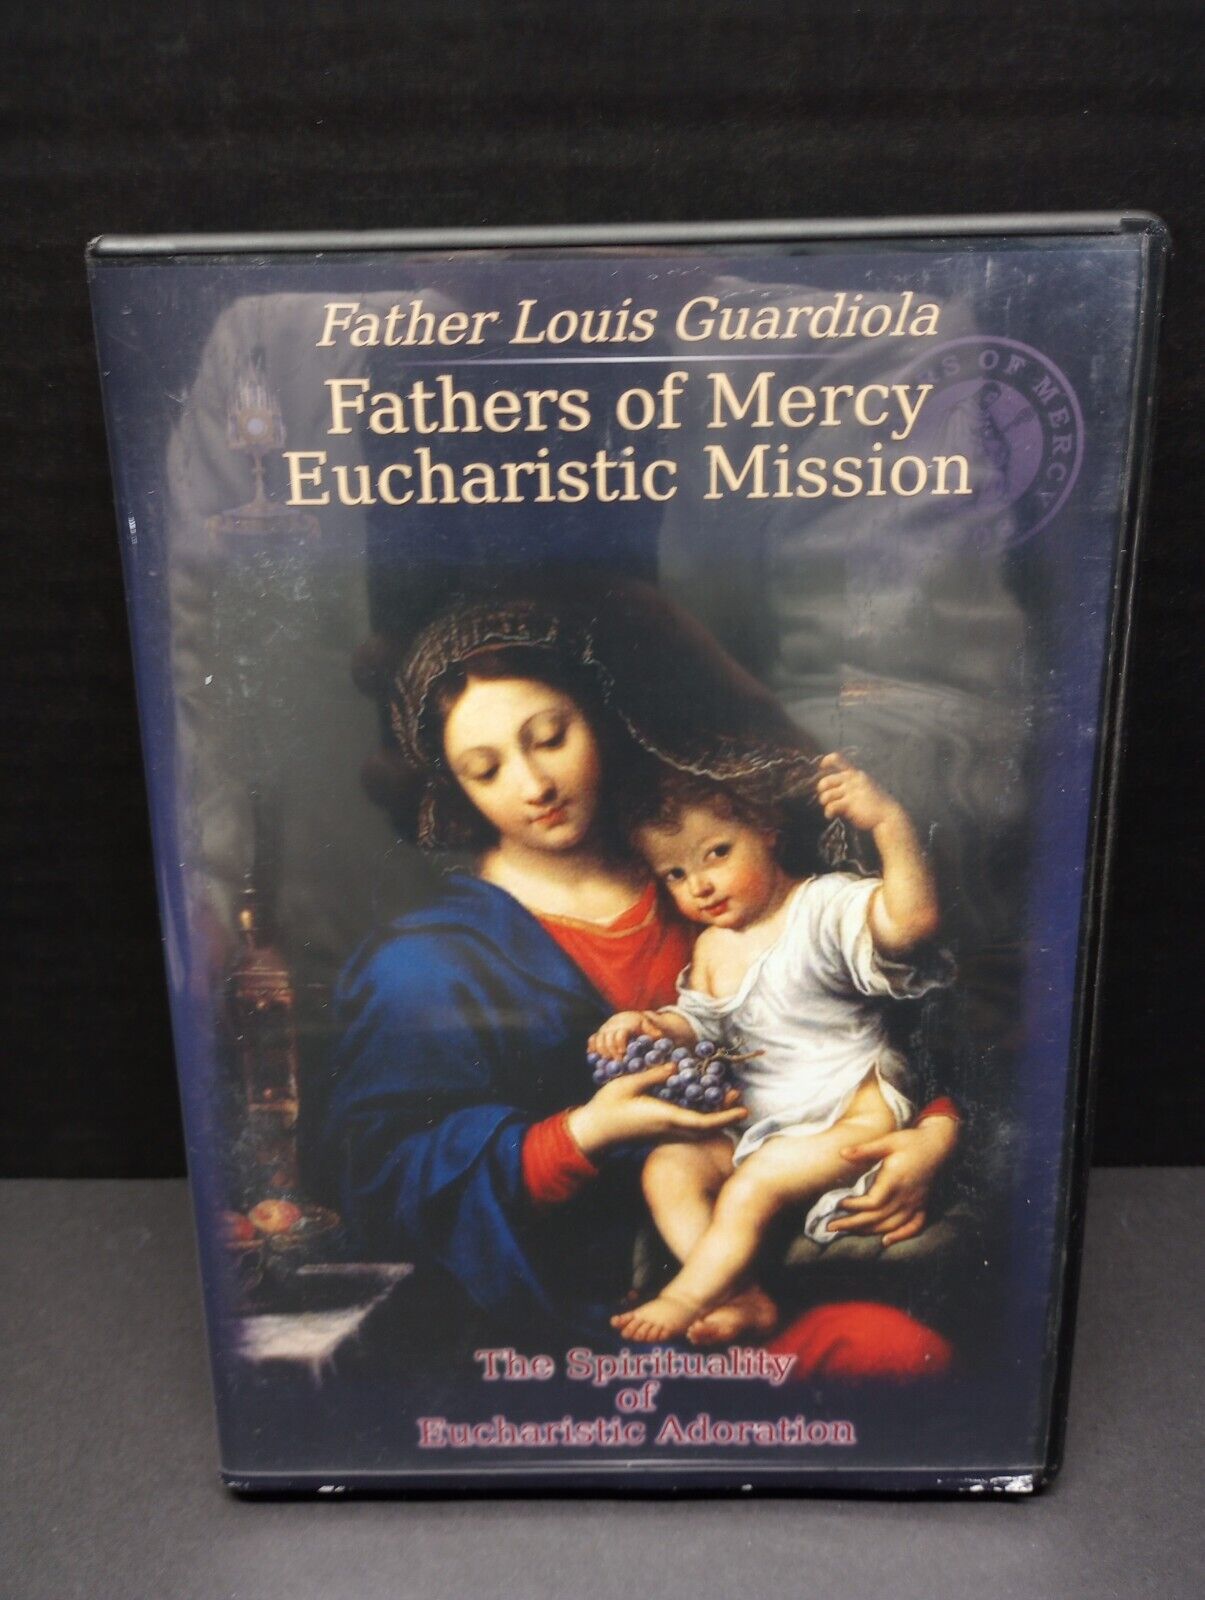 FATHER LOUIS GUARDIOLA The Spirituality Of Eucharistic Adoration 3 CD Set